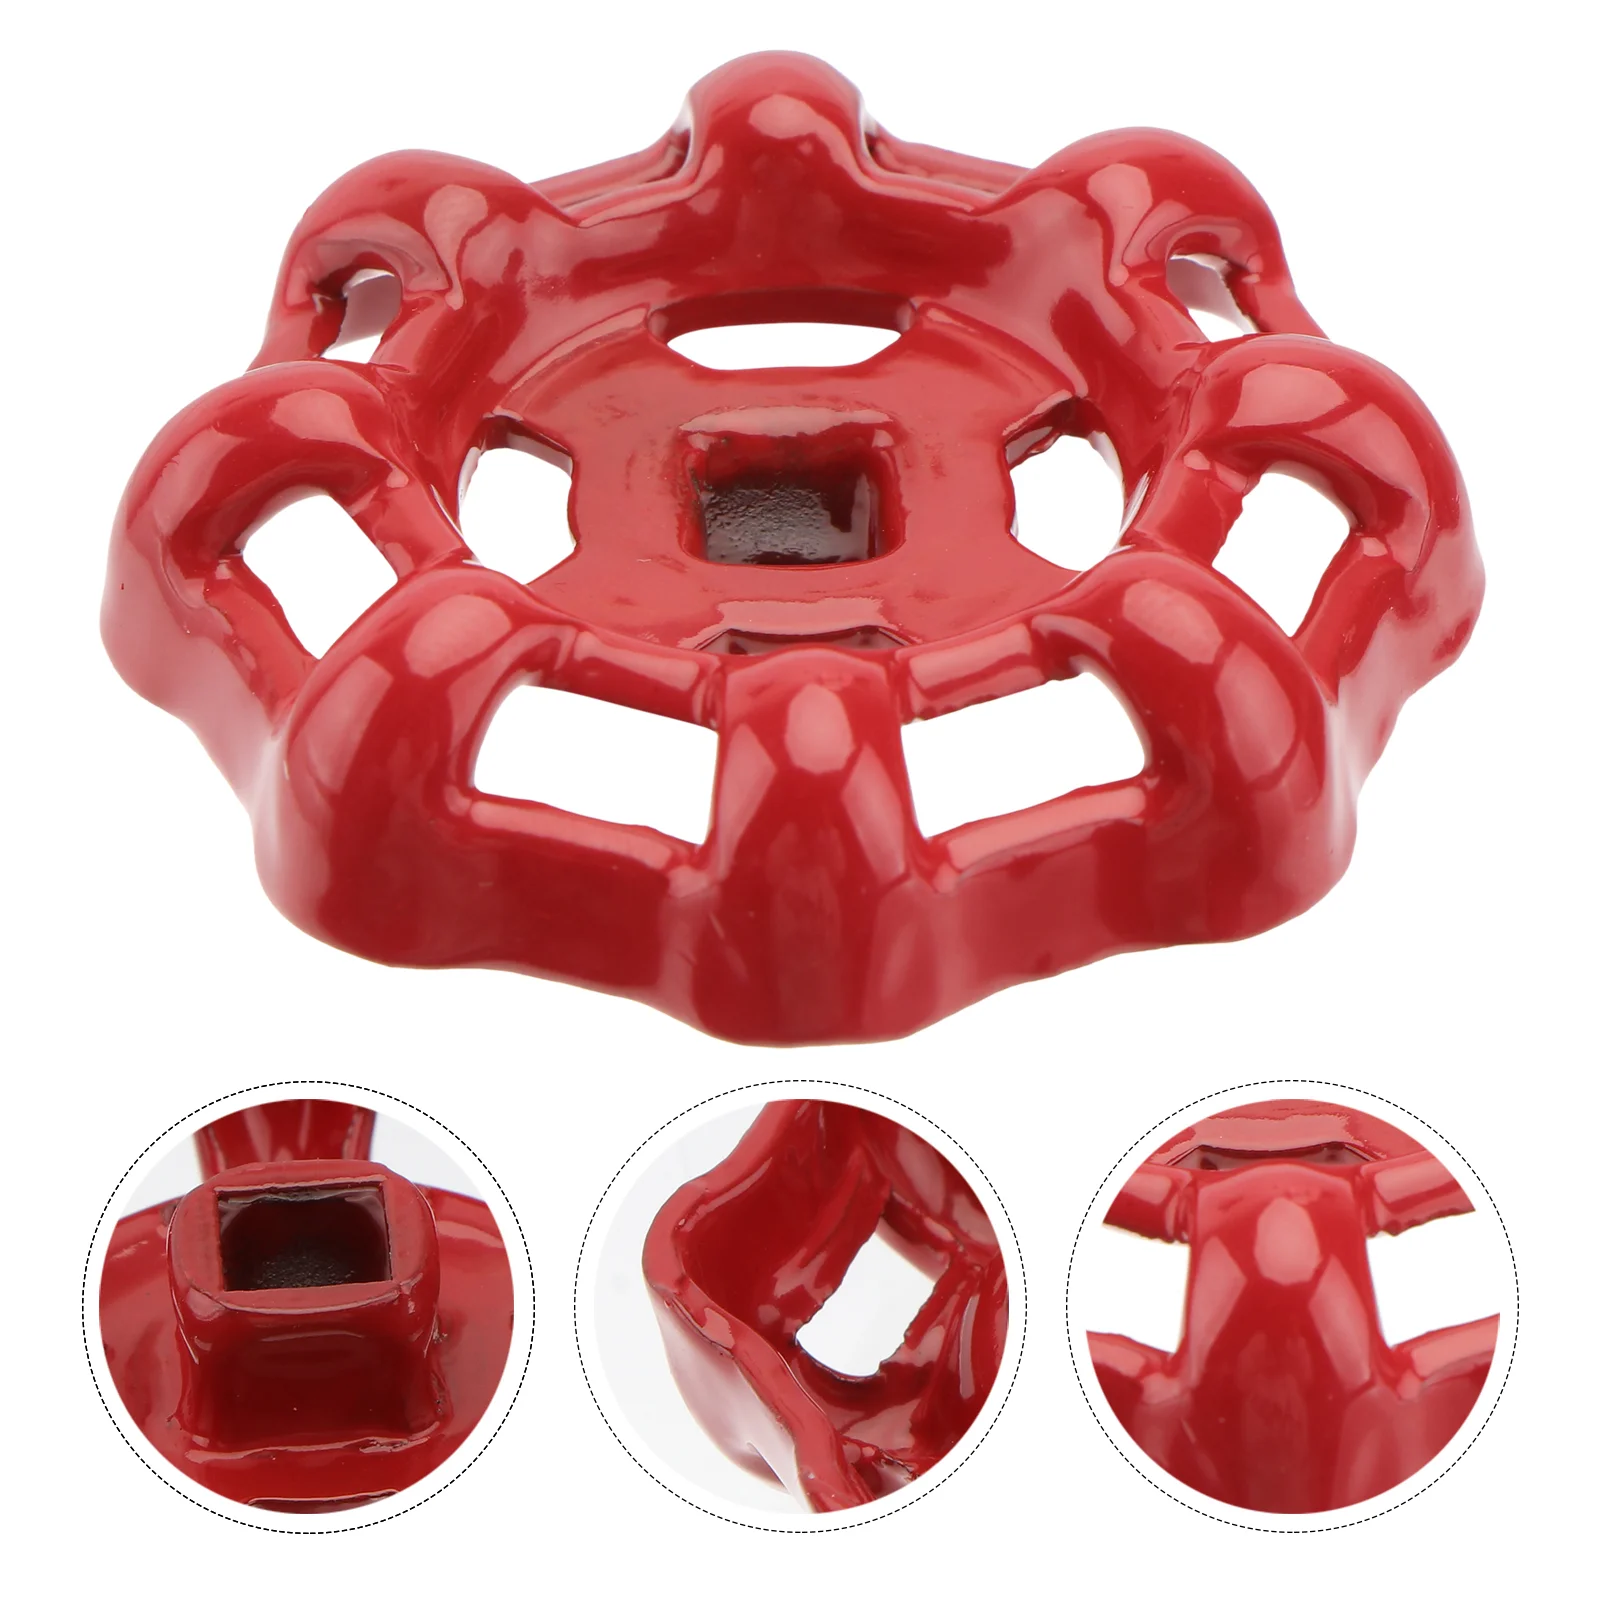 

6*6 Cast Iron Valve Handle Gate Valve Ball Valve Hand Wheel Shutoff Value Decorative Water Pipe Fittings (Red)